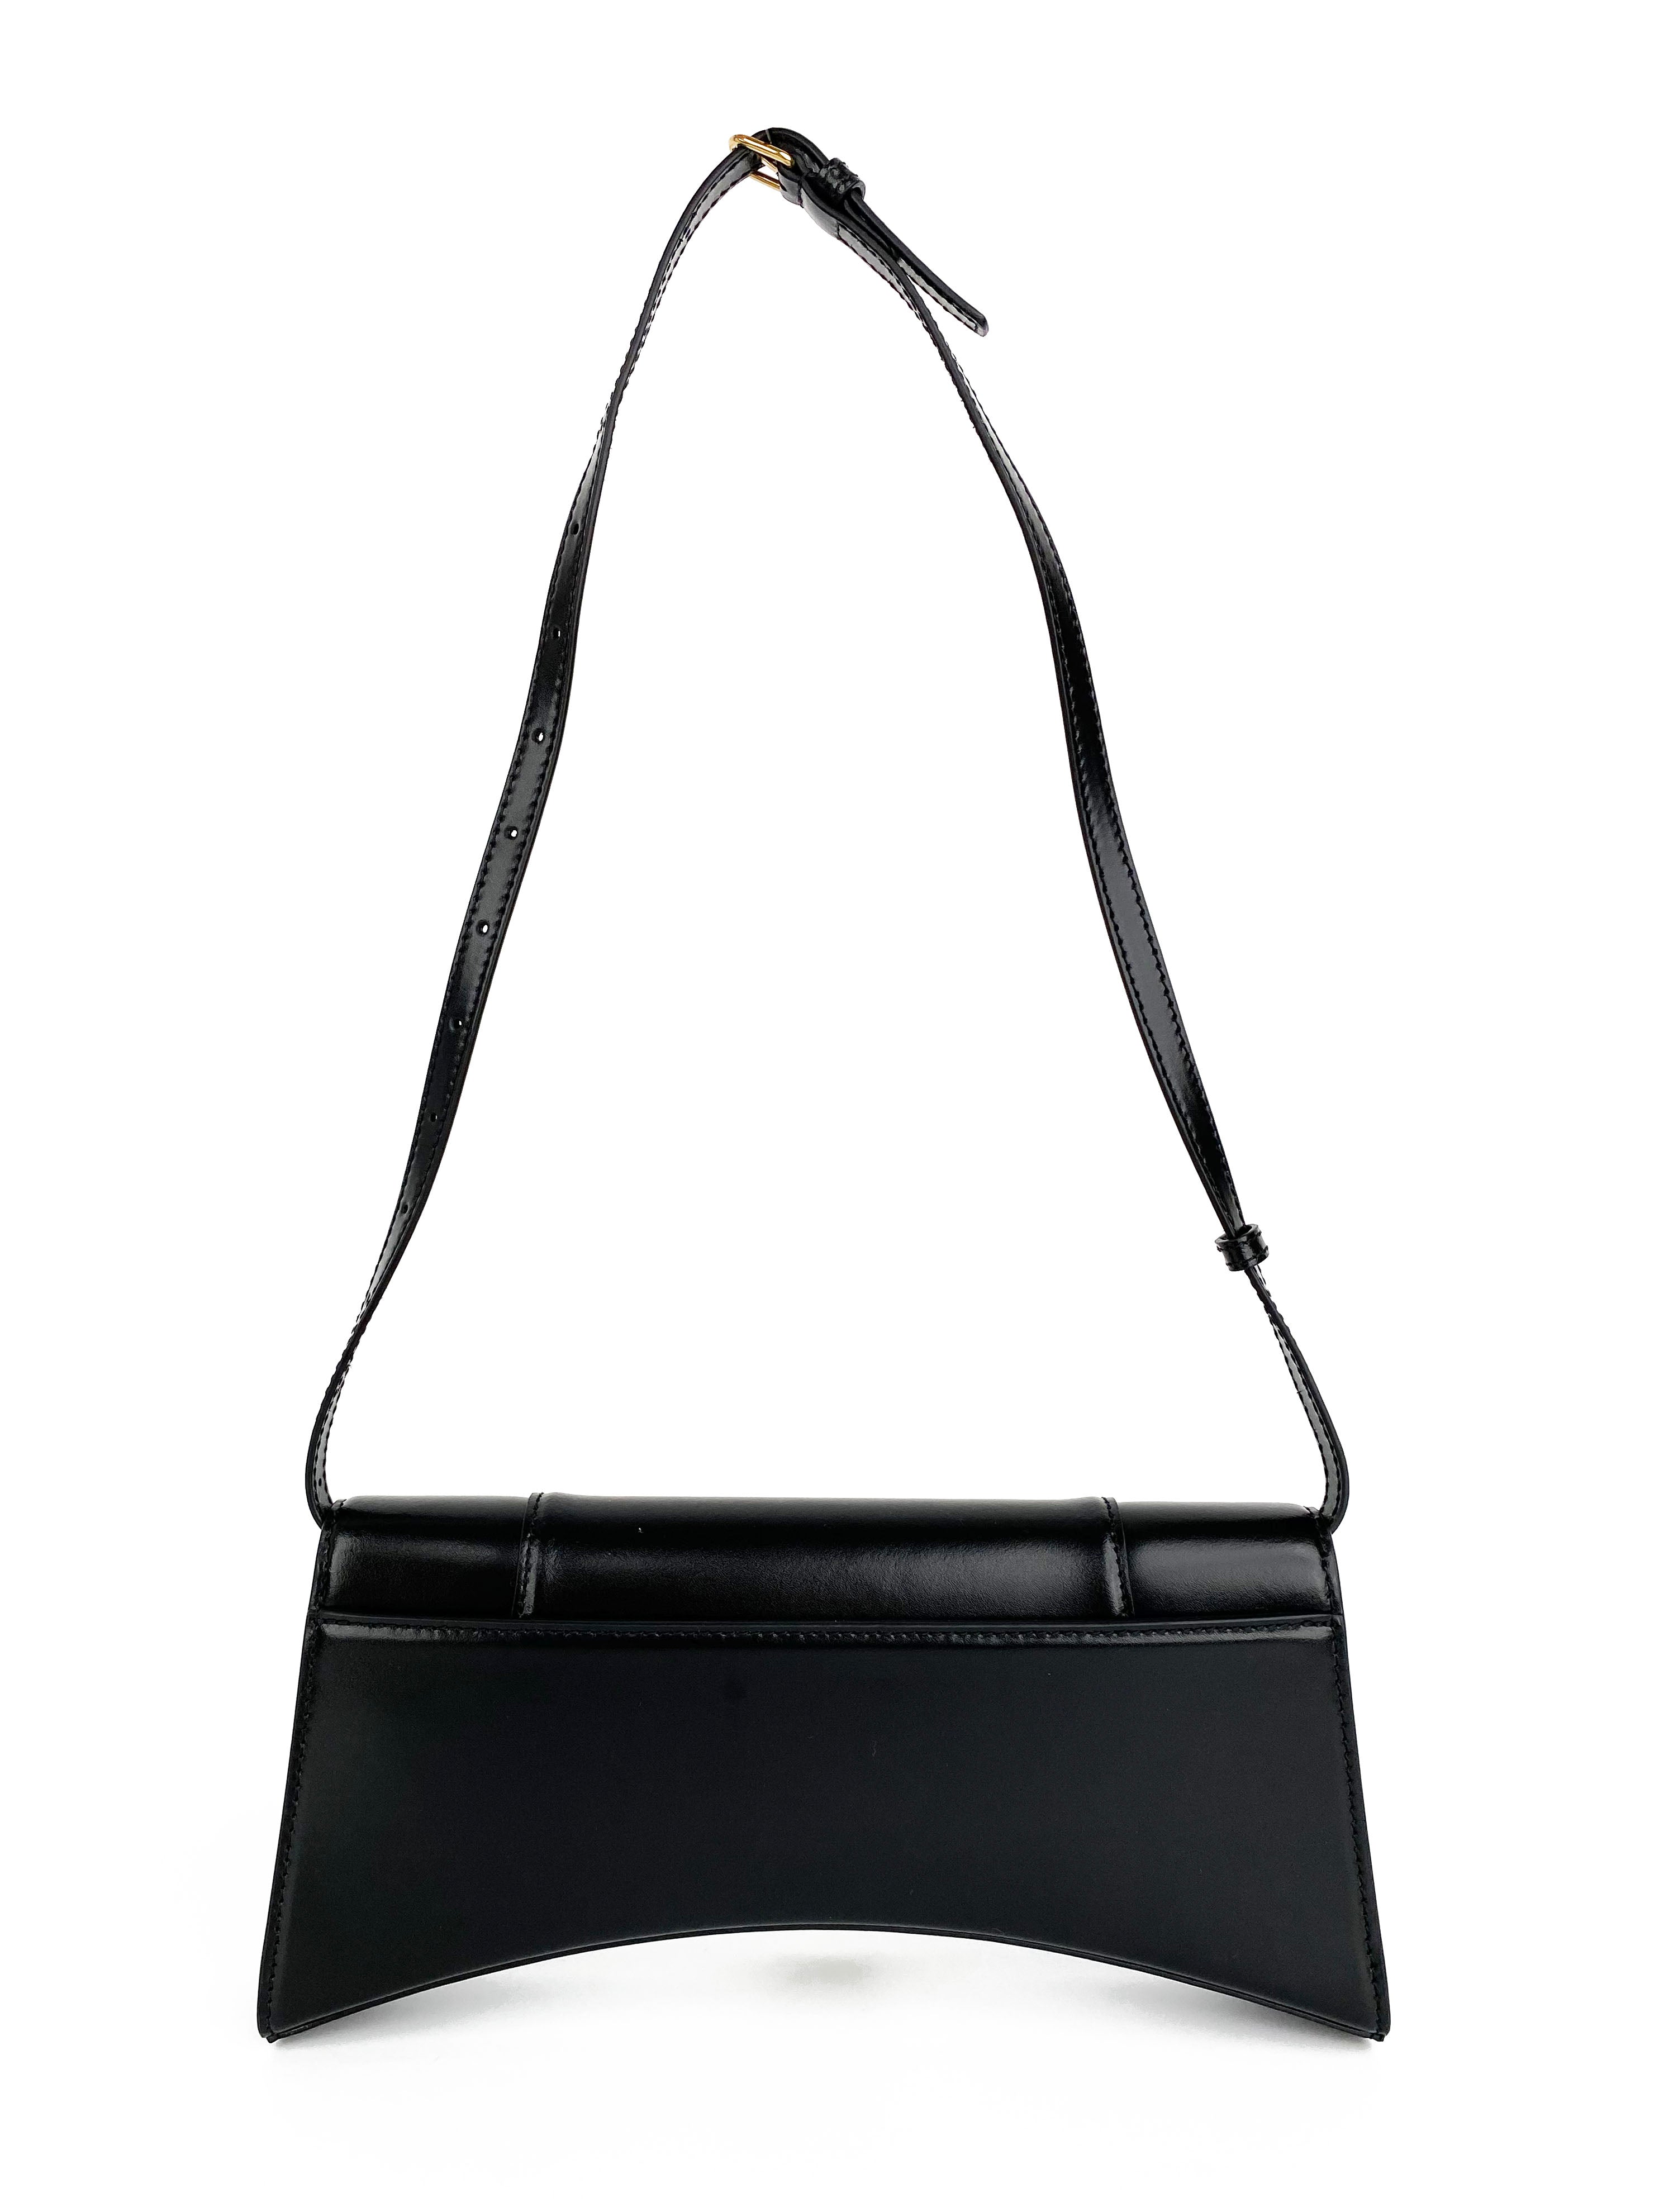 Balenciaga Black Hourglass Baguette Bag